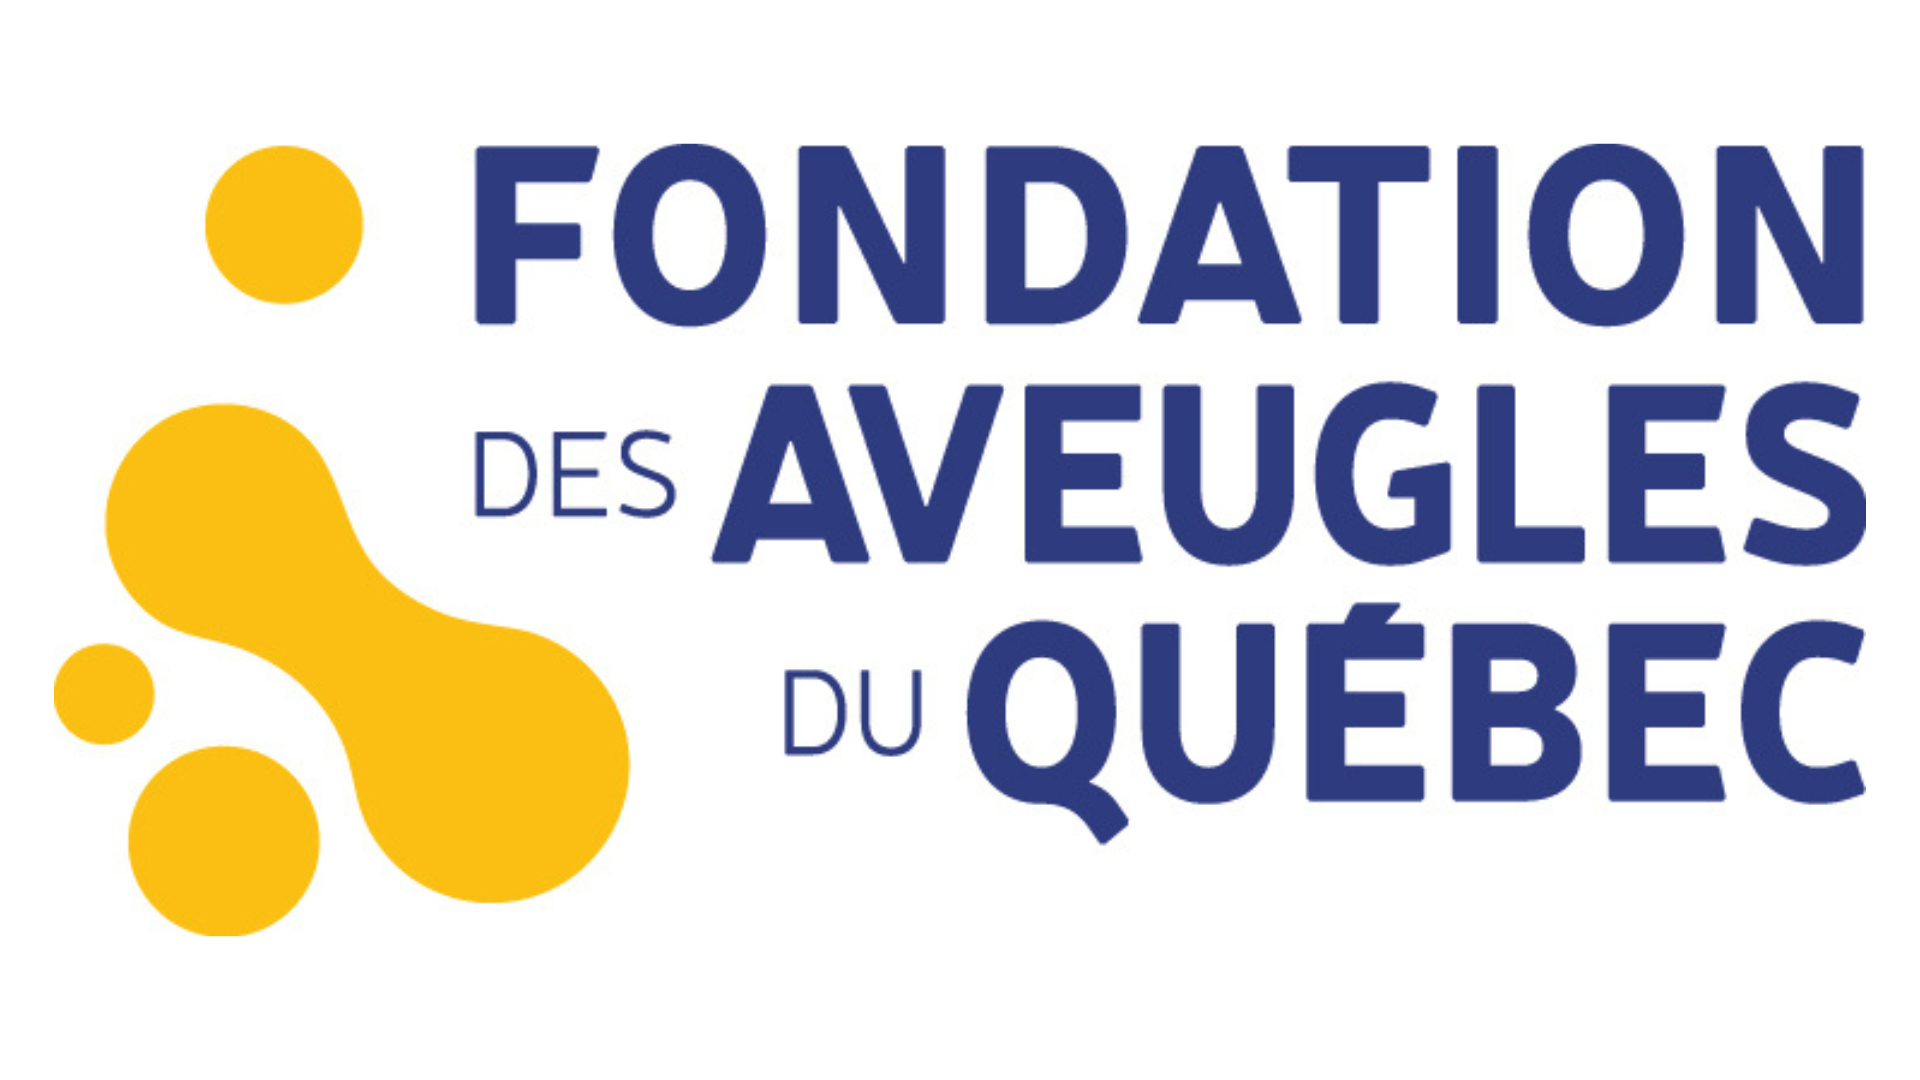 Fondation des aveugles du Quebec